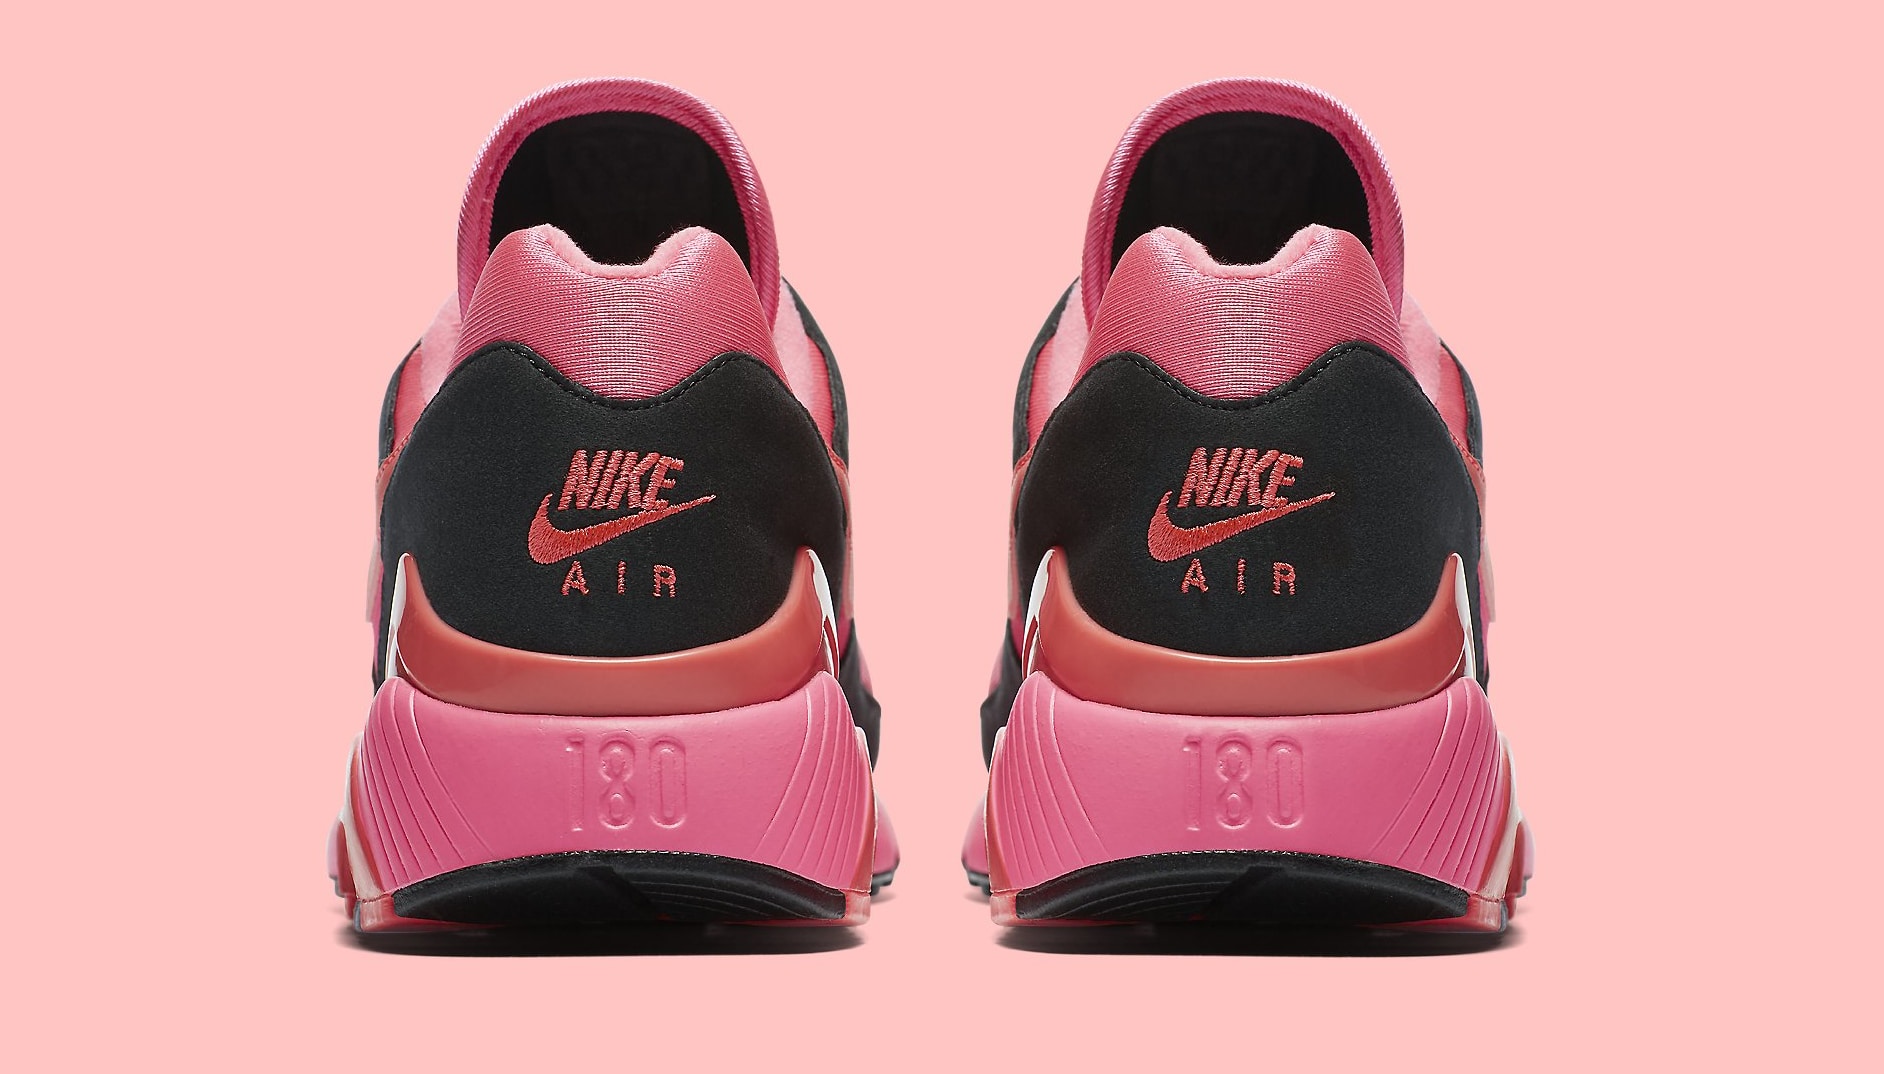 Sepatu Nike Air aMax 180 x Comme des Garcons CDG 2018 - Black Pink